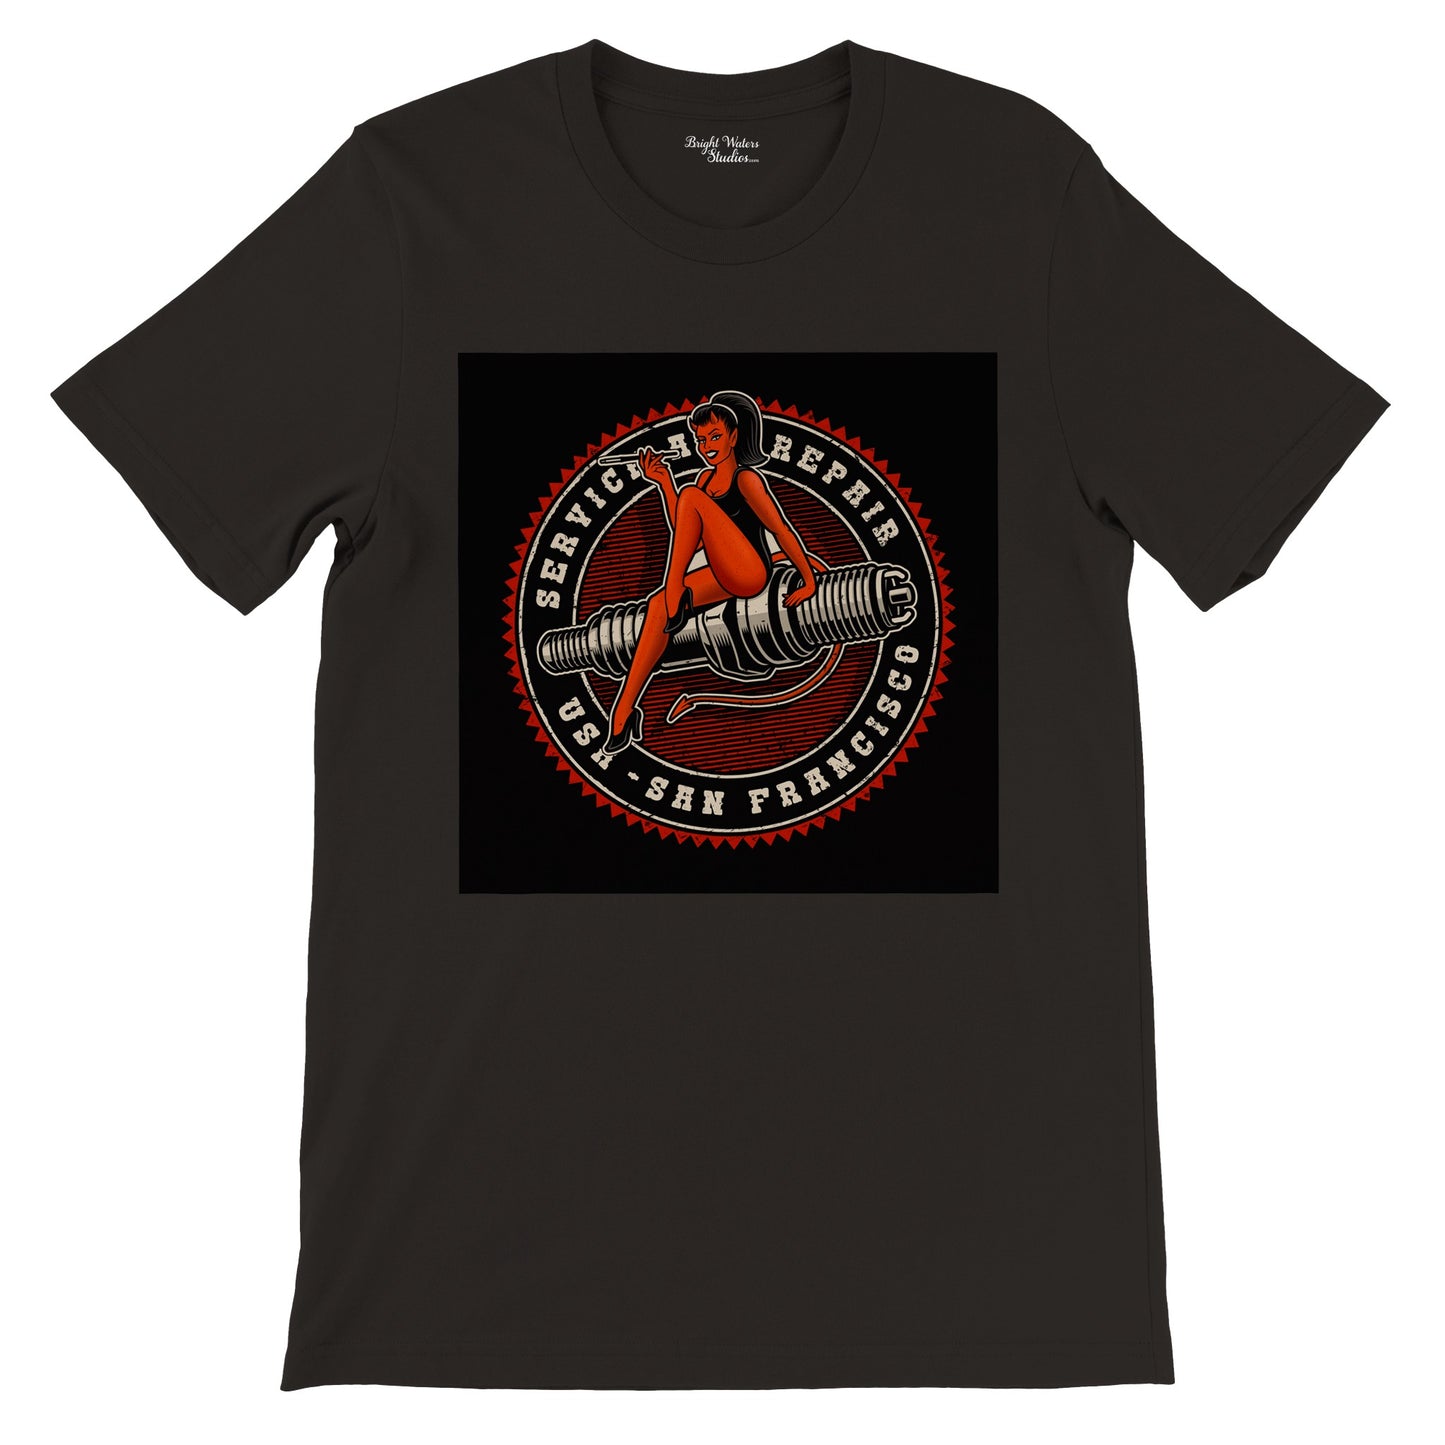 Rockabilly Devil T-shirt